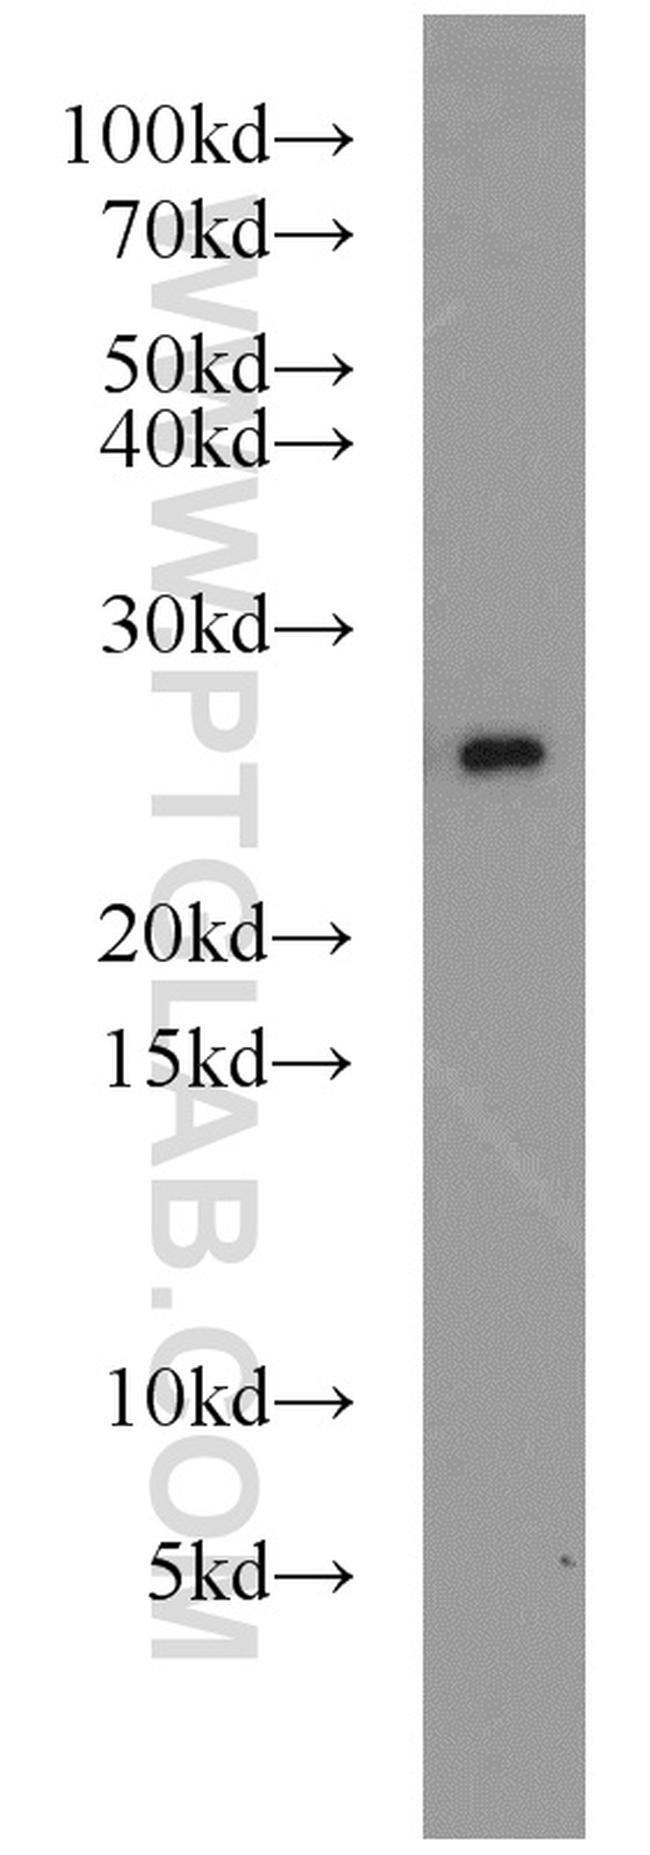 PRDX3 Antibody in Western Blot (WB)